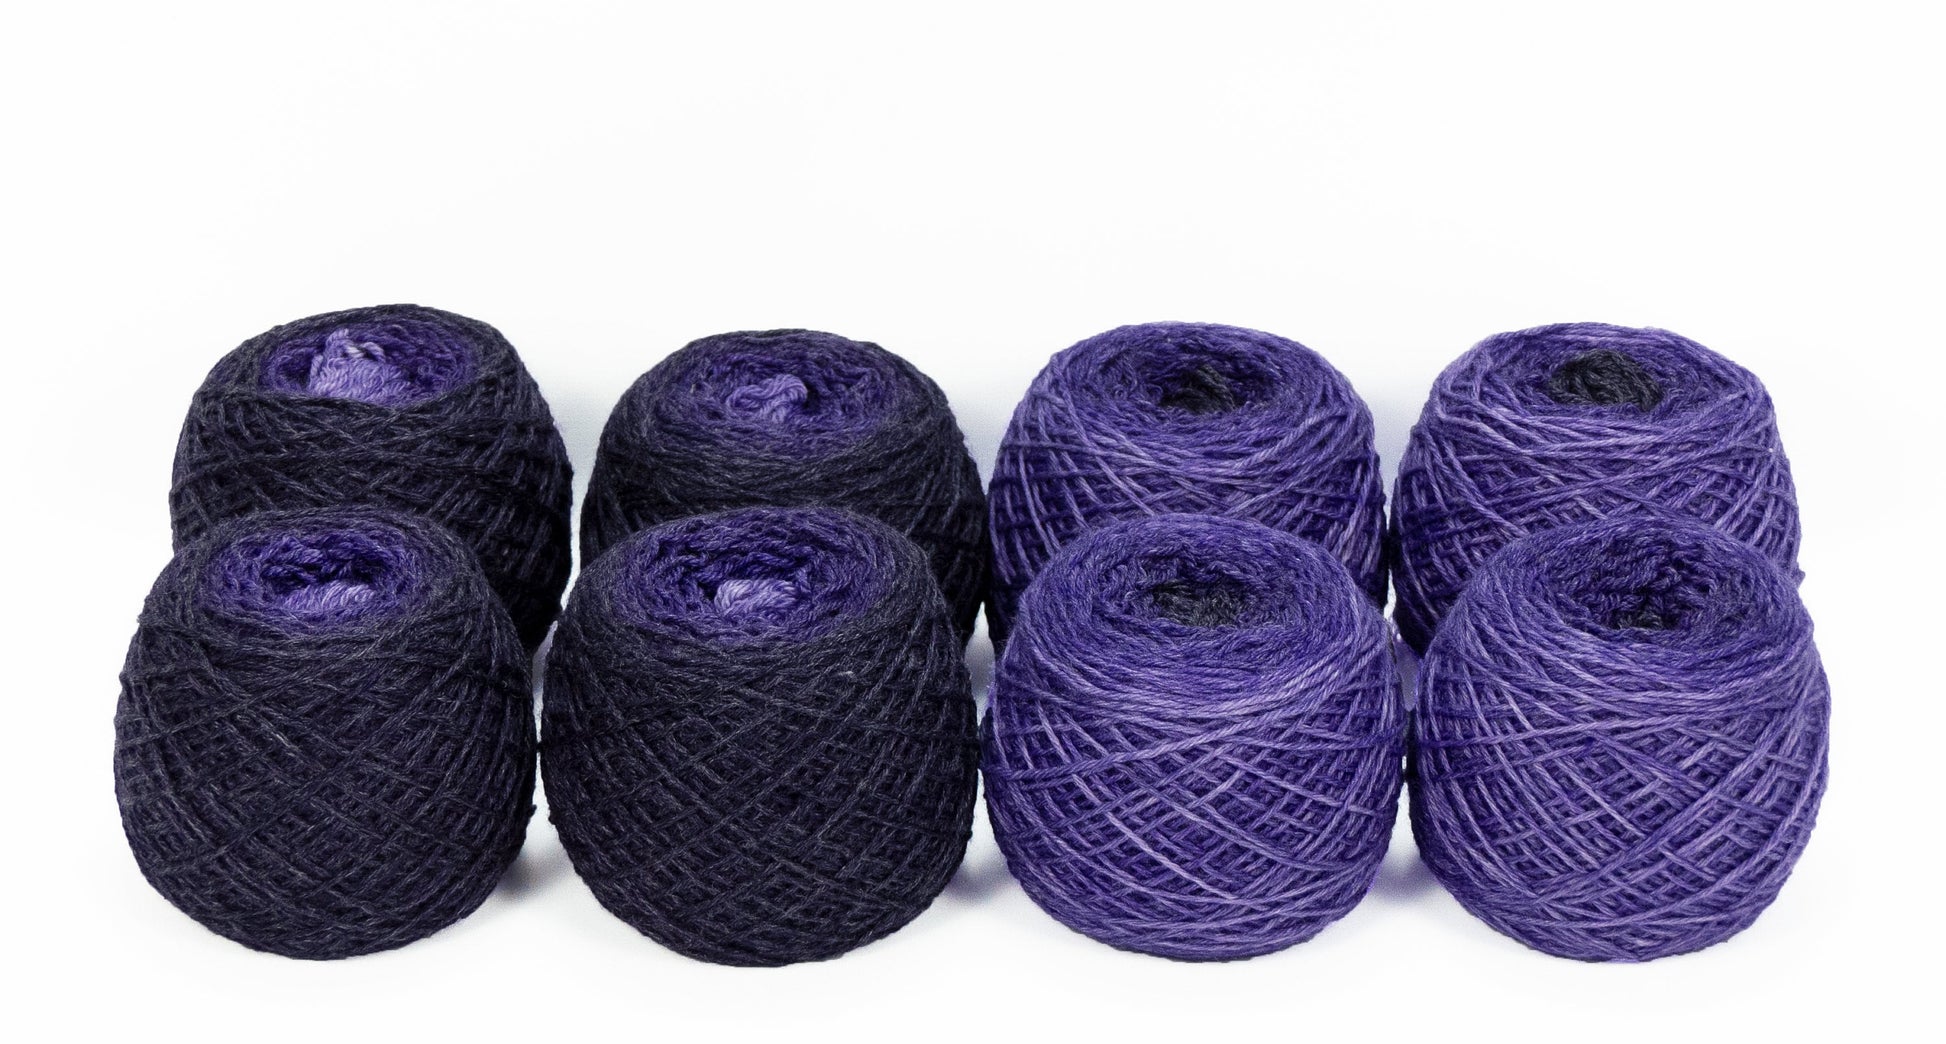 Sock Twins " Lavendula " - Lleaf SW Merino/Bamboo Handpainted Gradient Sock Yarn Set